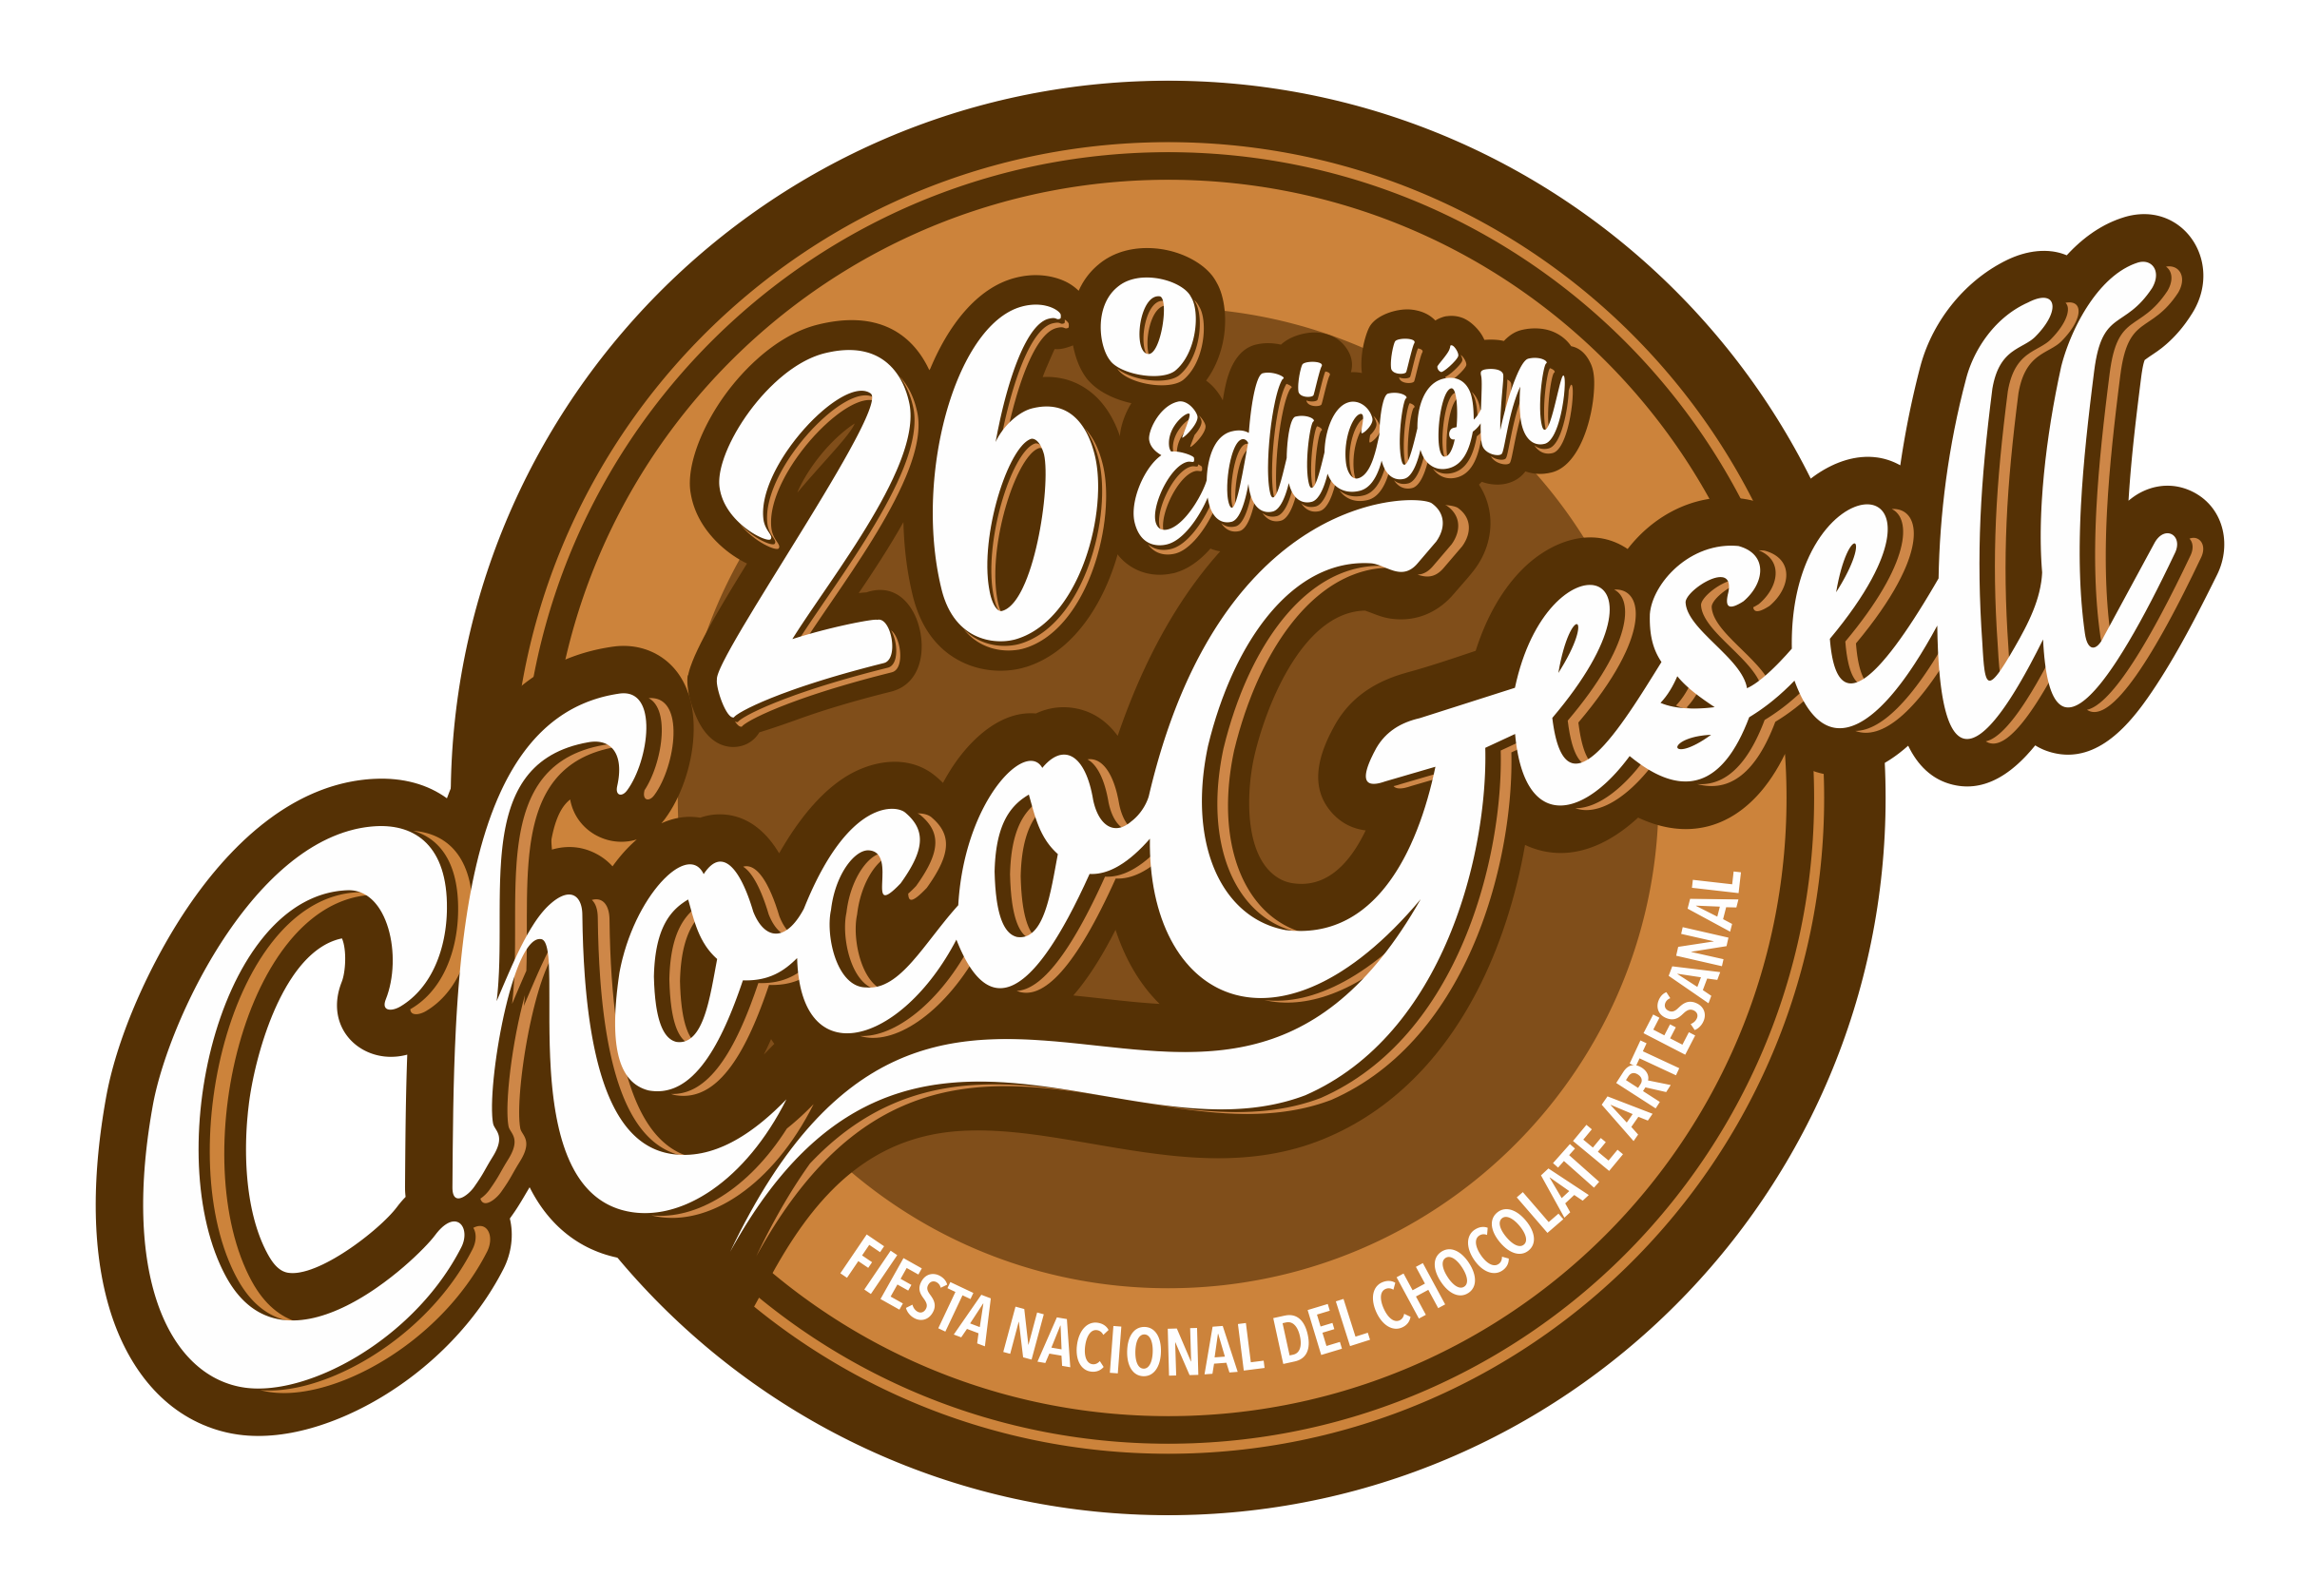 Kit Grafico Chocogesell 2022